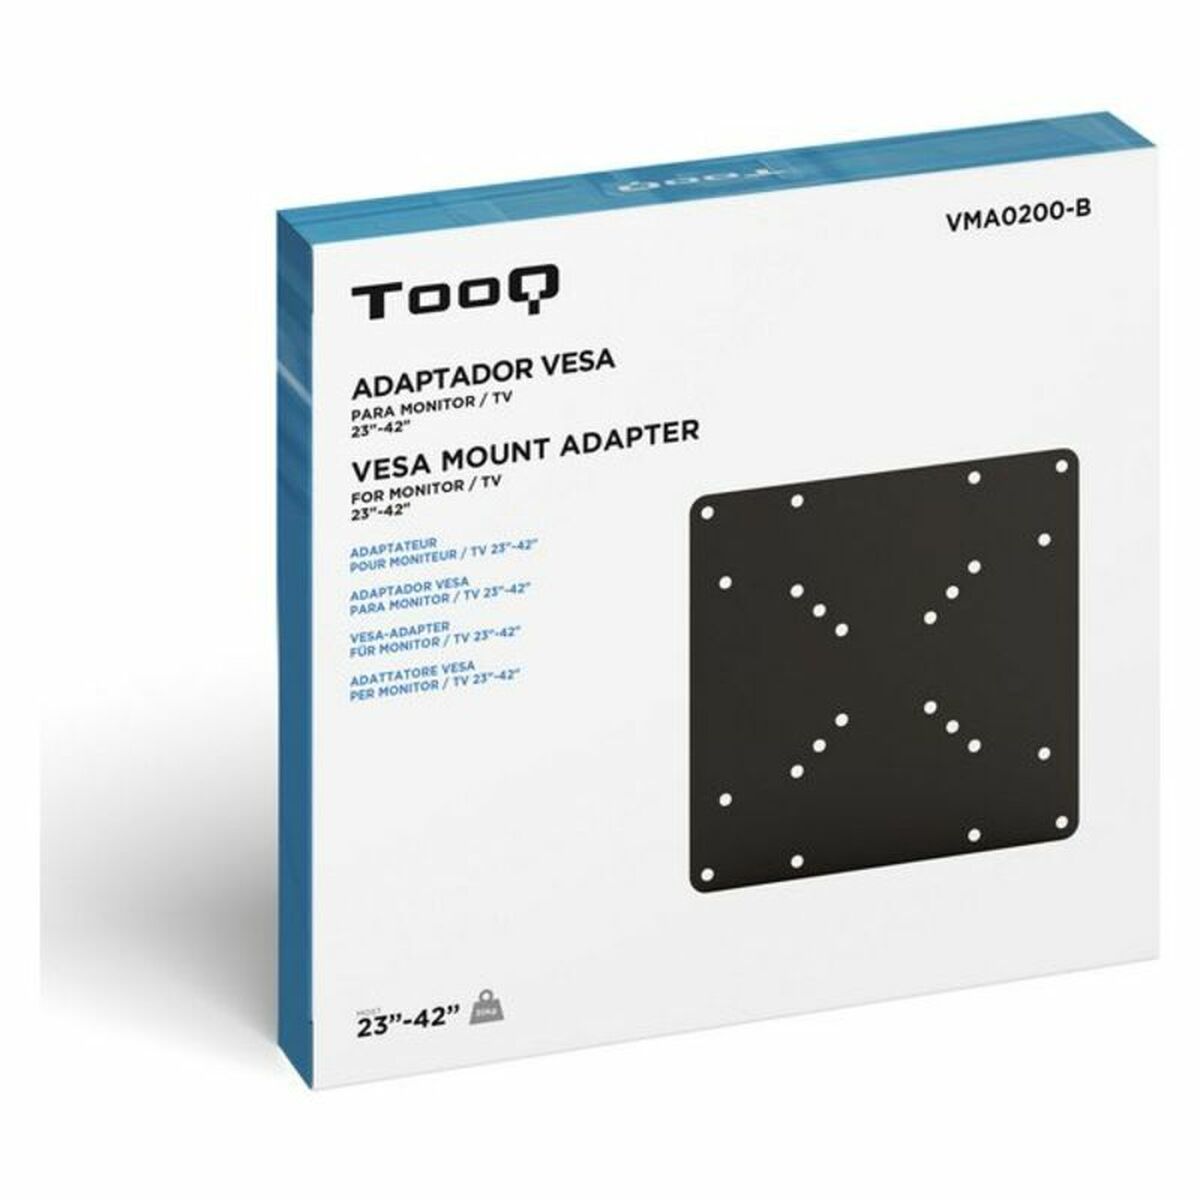 TooQ VMA0200-B 23"-42" Adapter